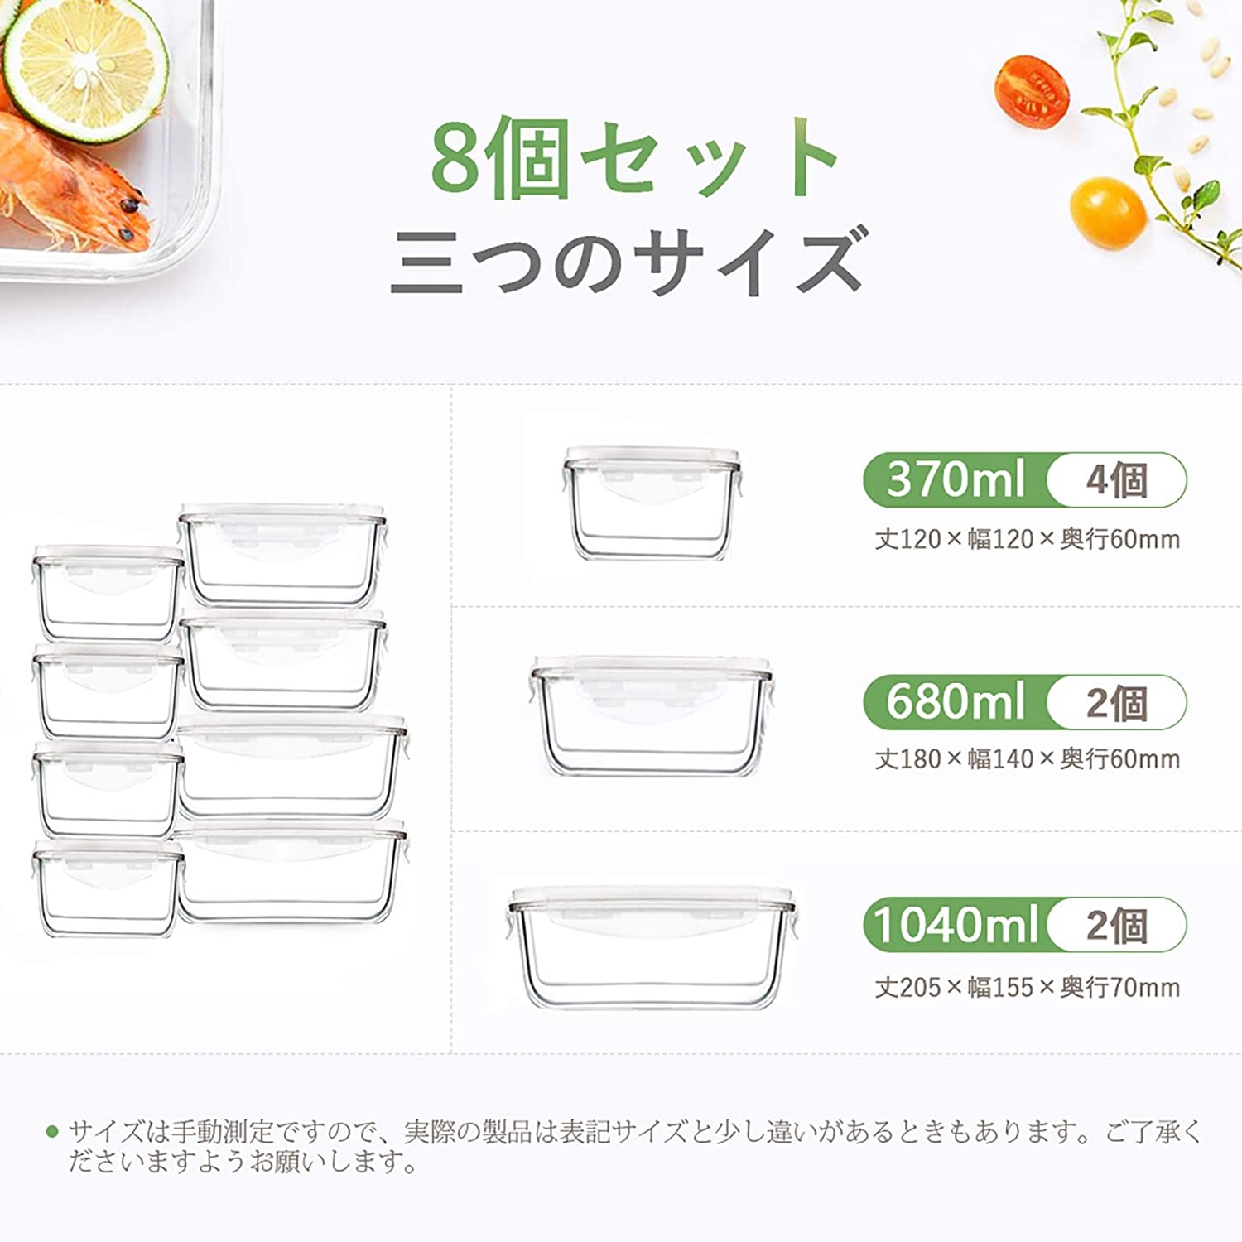 Kitsure(キッツシュア) 耐熱ガラス 保存容器 8点セットの商品画像サムネ6 